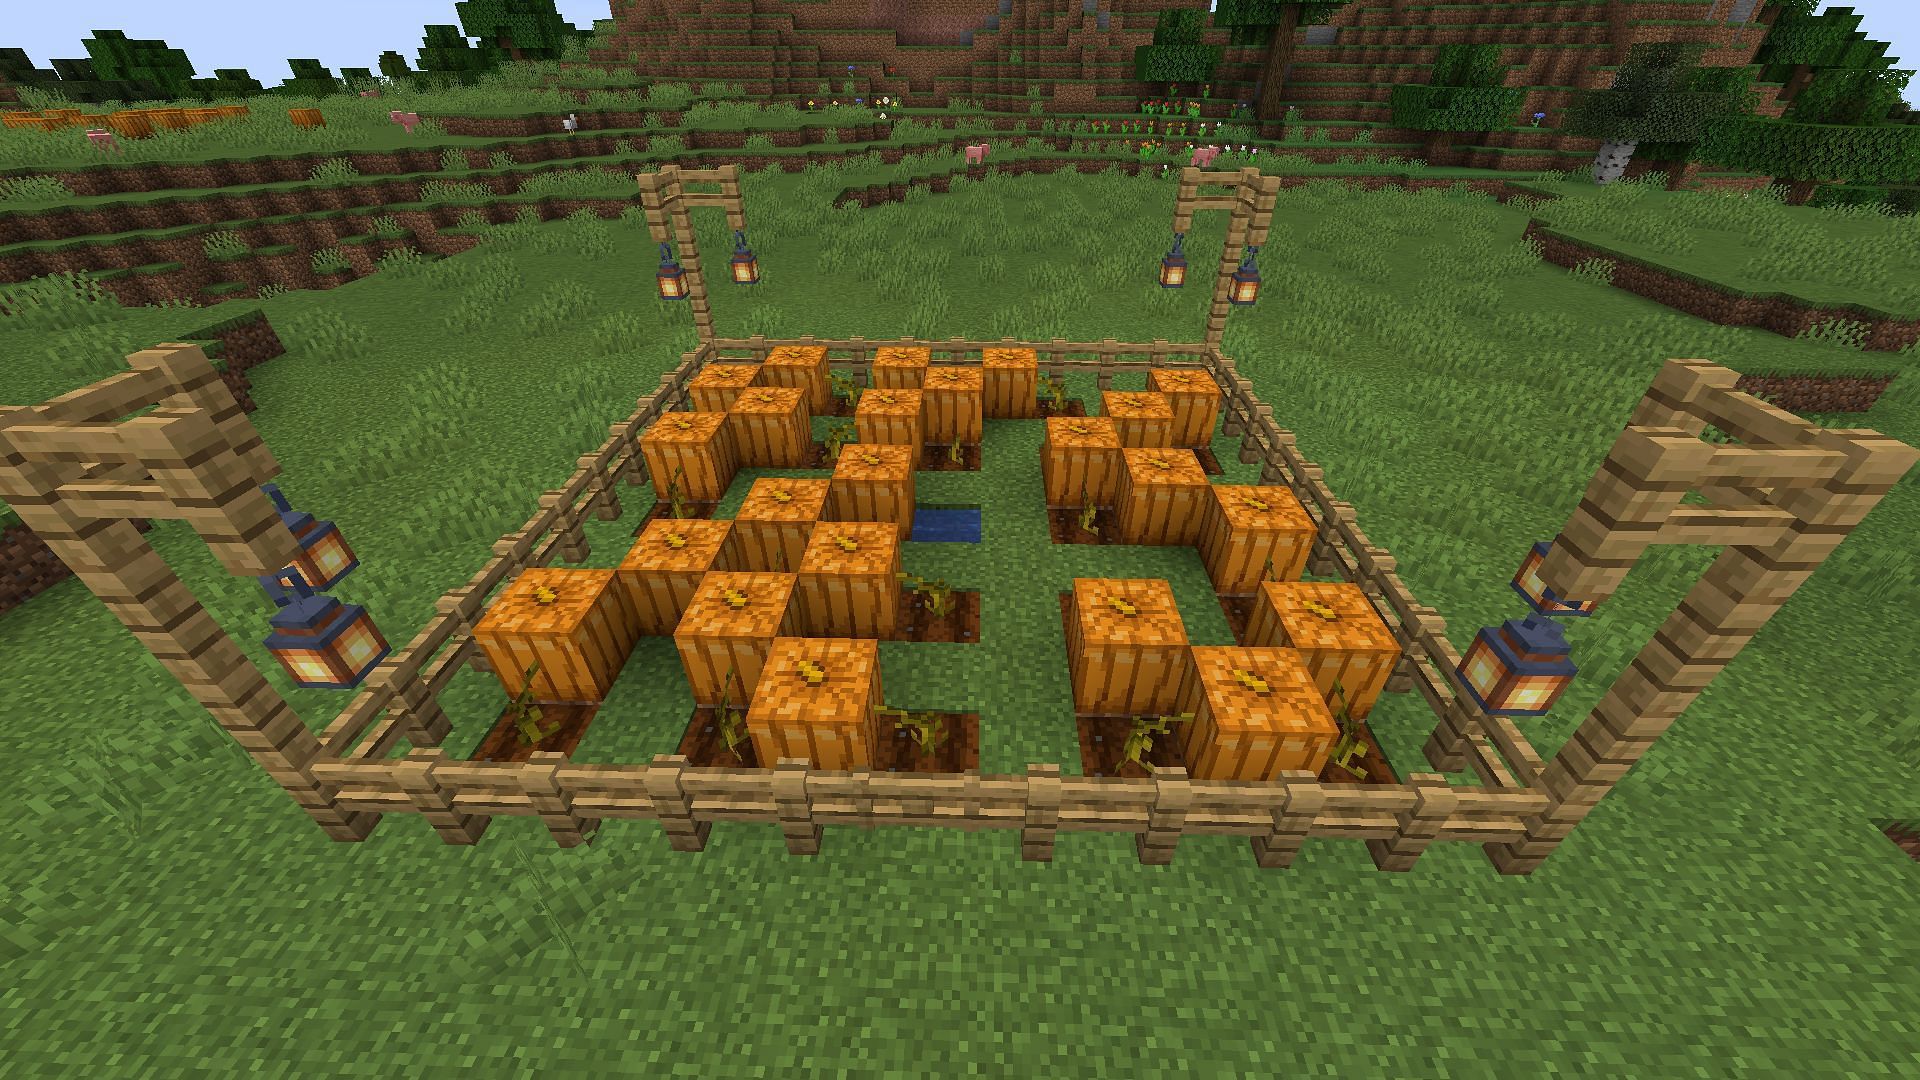 A basic pumpkin farm in Minecraft using the Rapid Harvest design style (Image via Mojang)